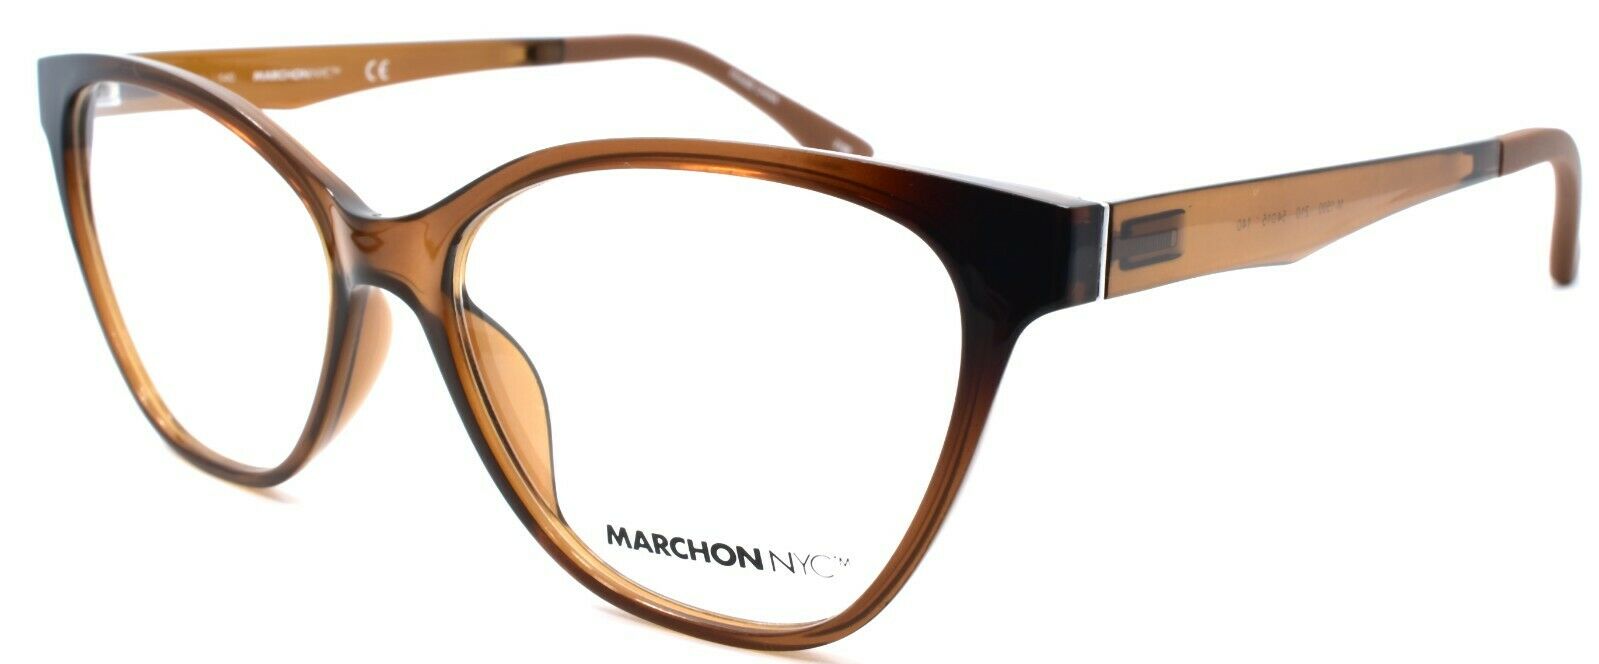 3-Marchon M-1500 210 Women's Eyeglasses 54-15-140 Brown + 2 Magnetic Clip Ons-886895485845-IKSpecs